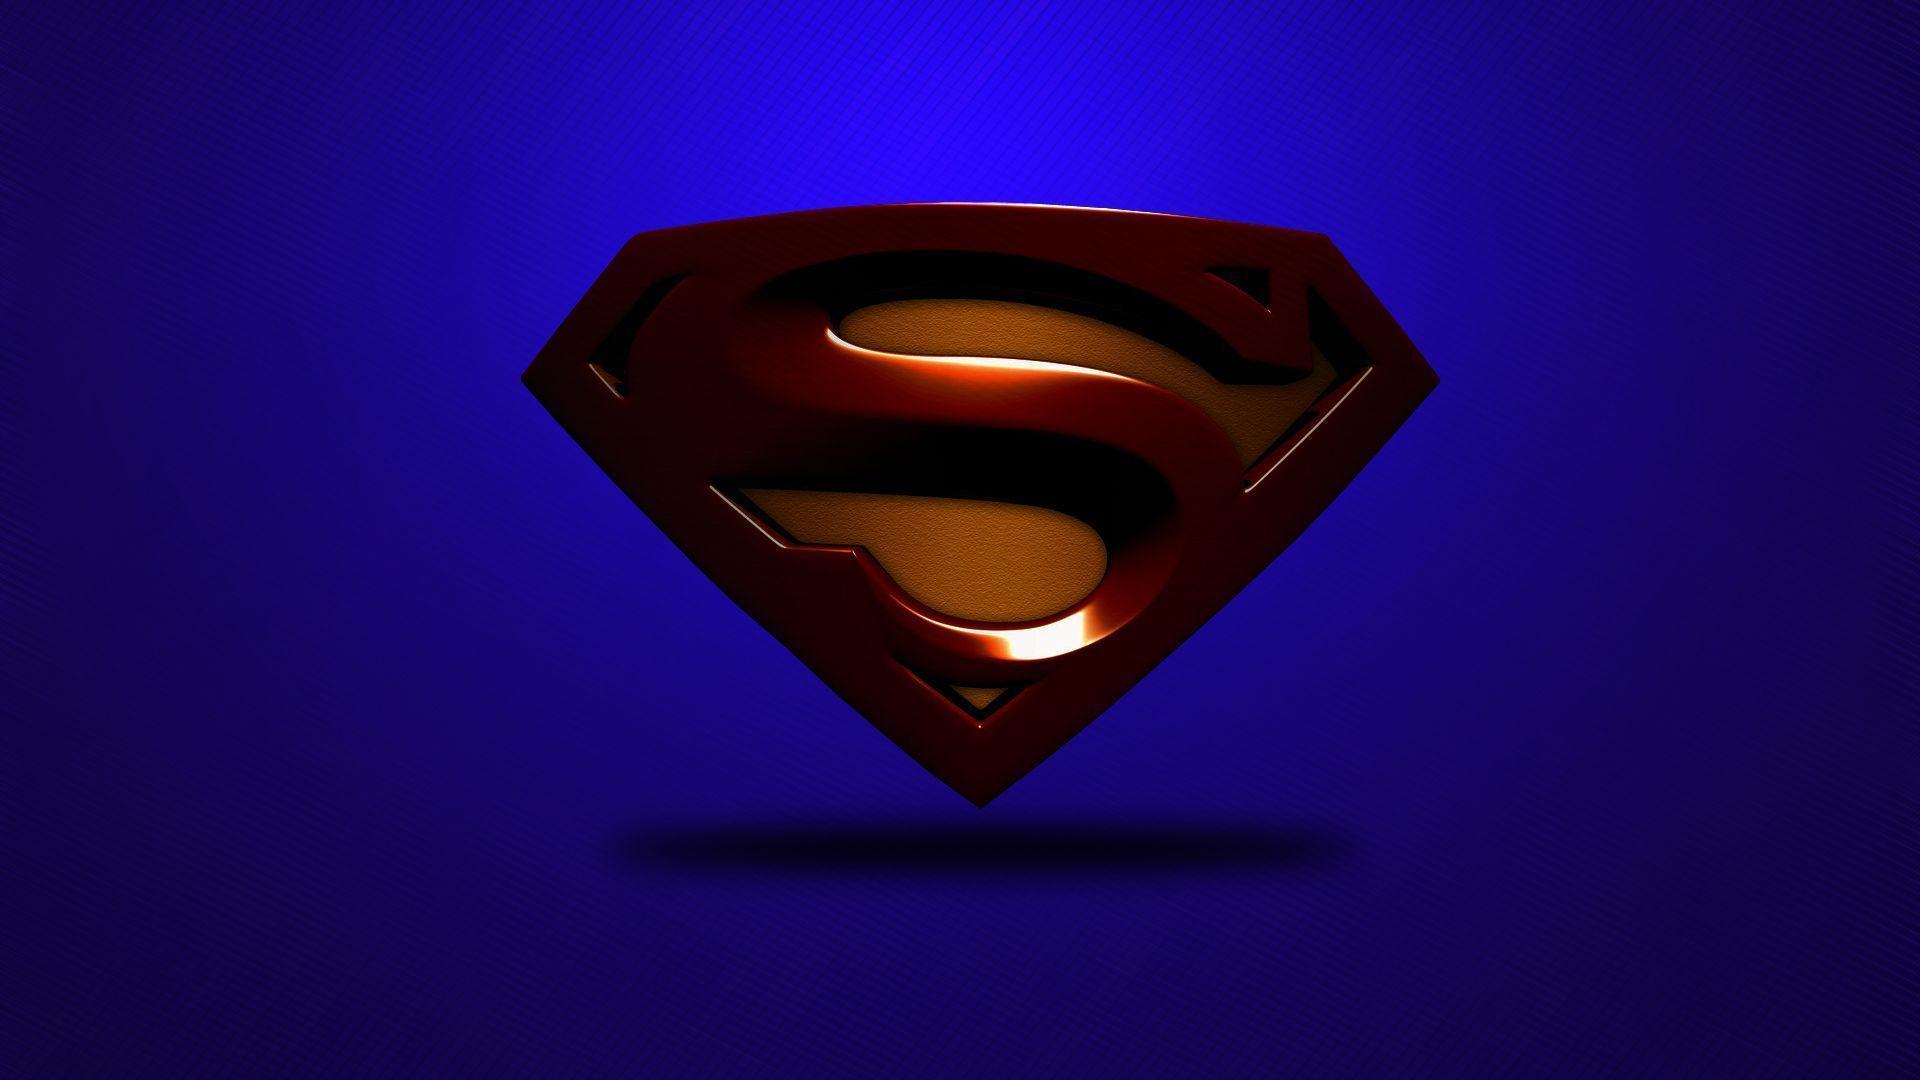 Logo Superman Wallpaper HD Free Download. Wallpaper, Background